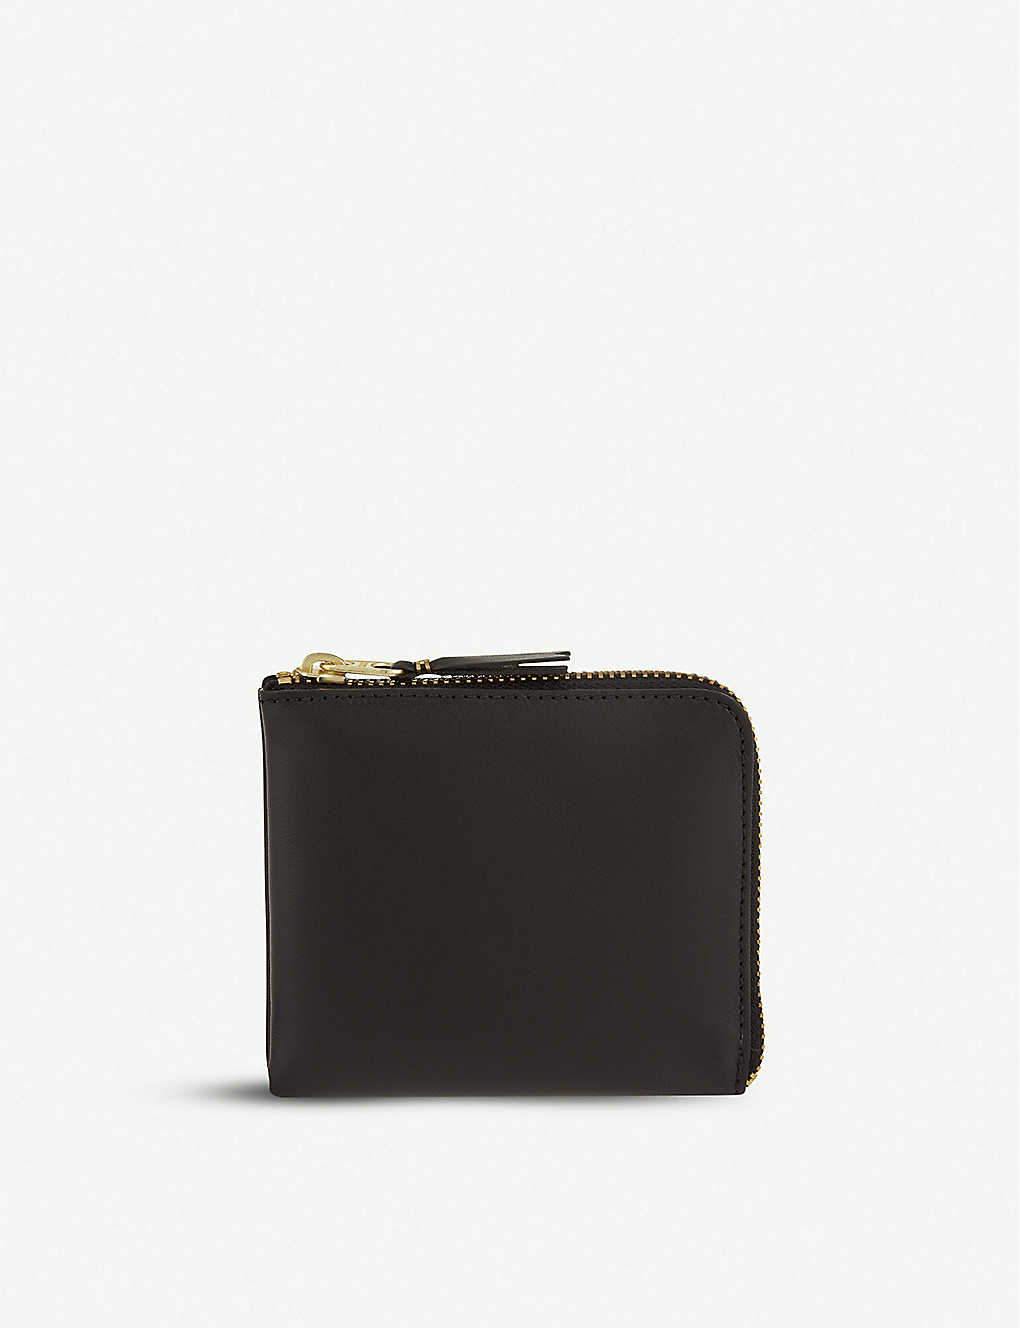 COMME DES GARCONS - Leather half-zip wallet